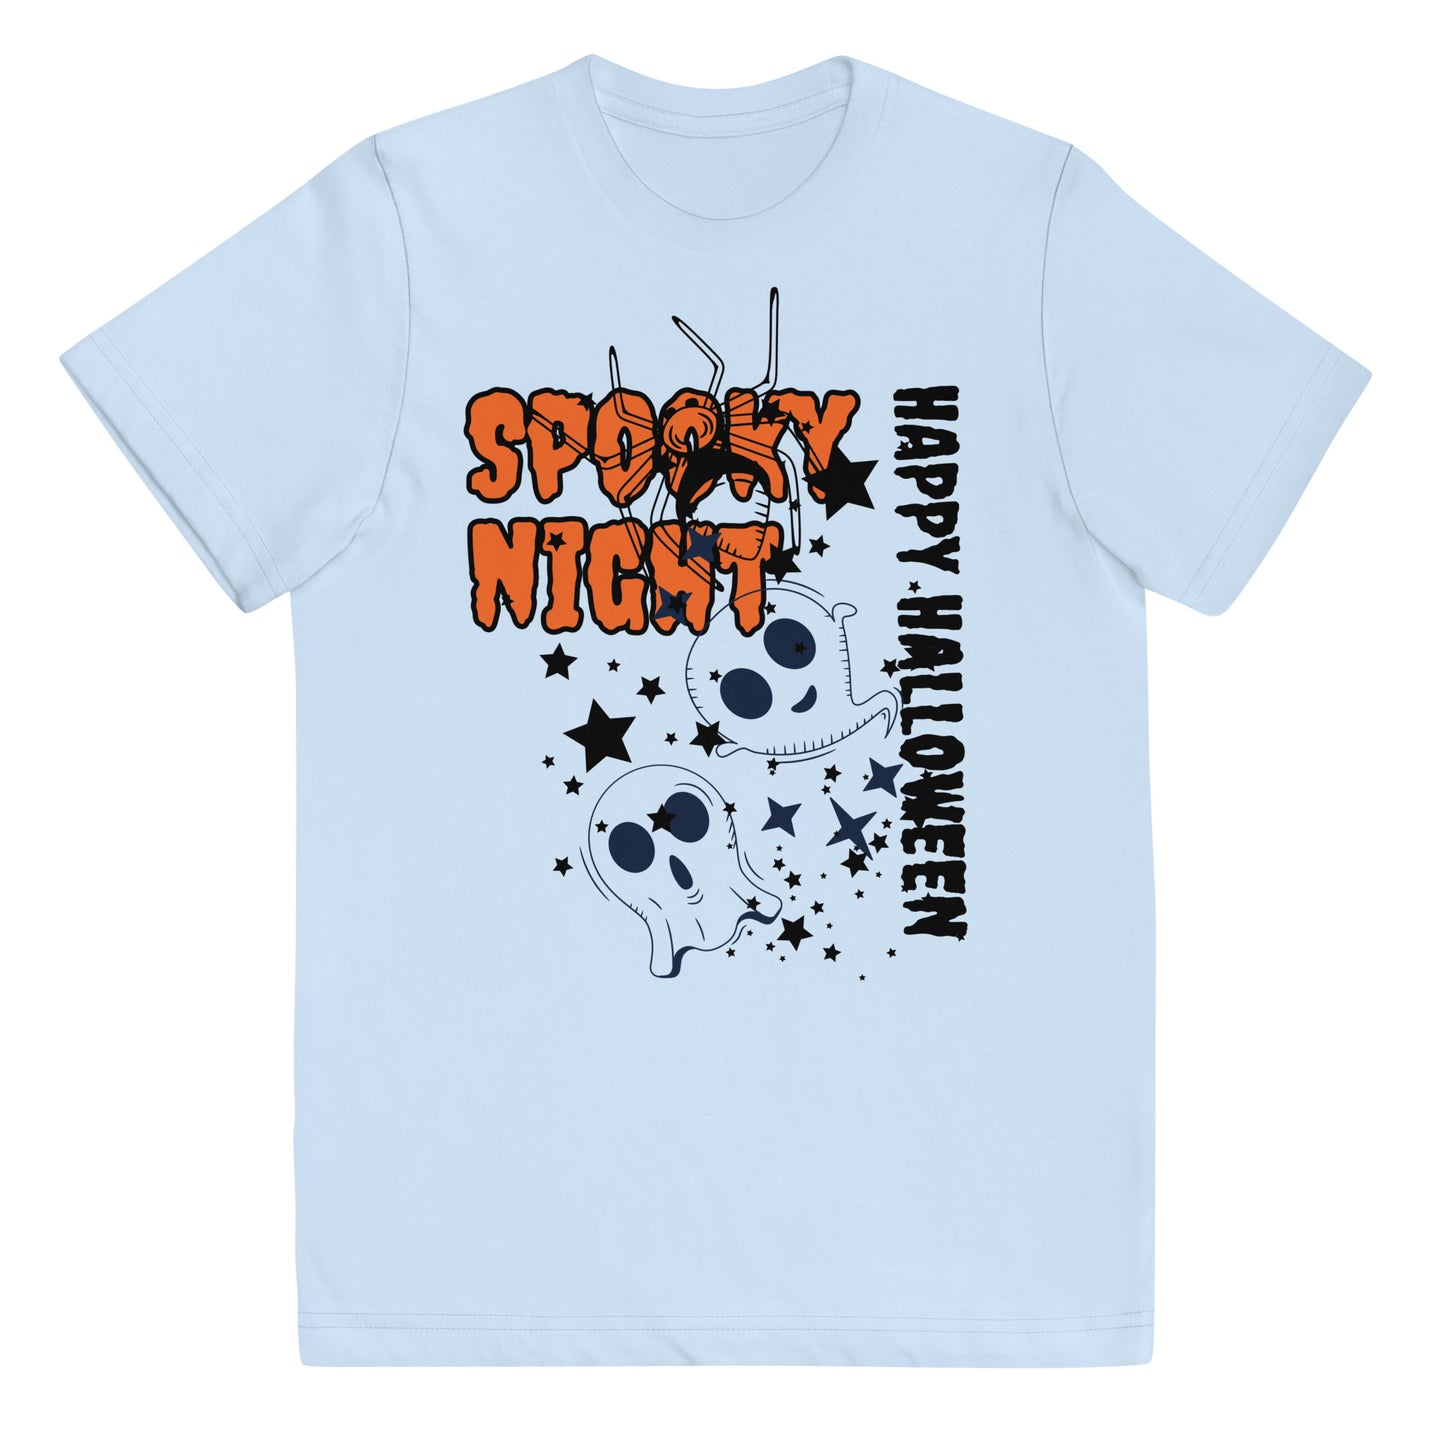 Spooky Night t-shirt